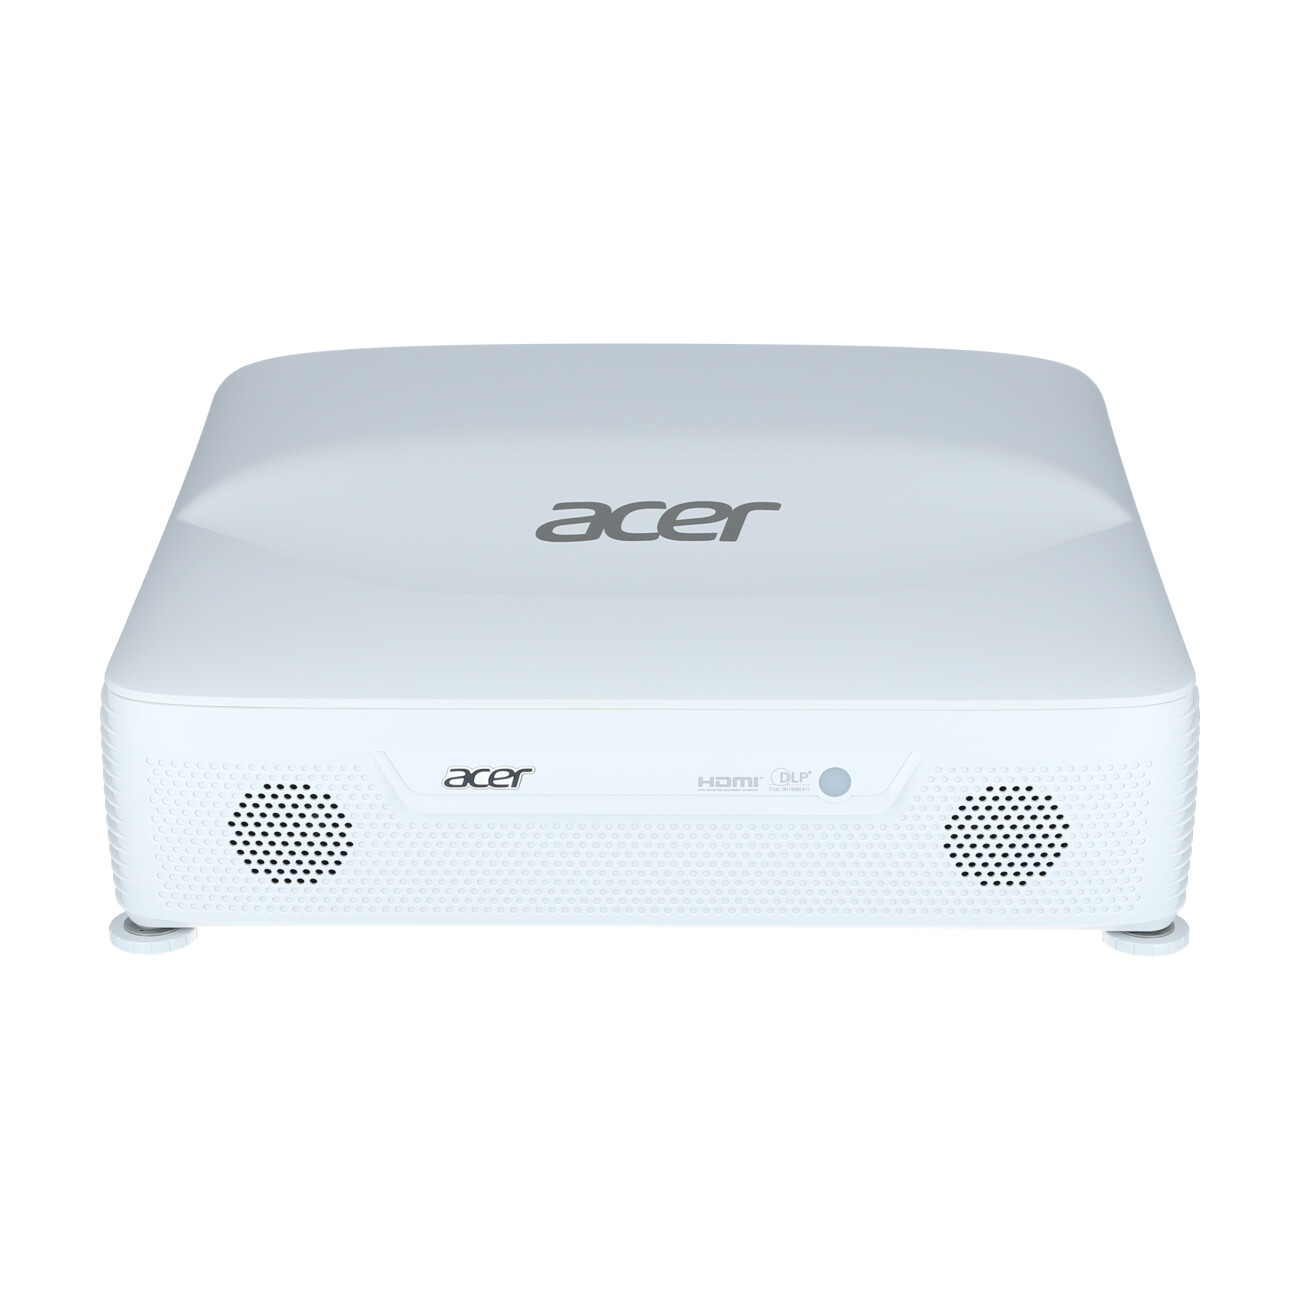 Acer-ApexVision-L812-Beamer-UST-Homecinema-4K-UHD-Laser-4000-Ansi-Lumen